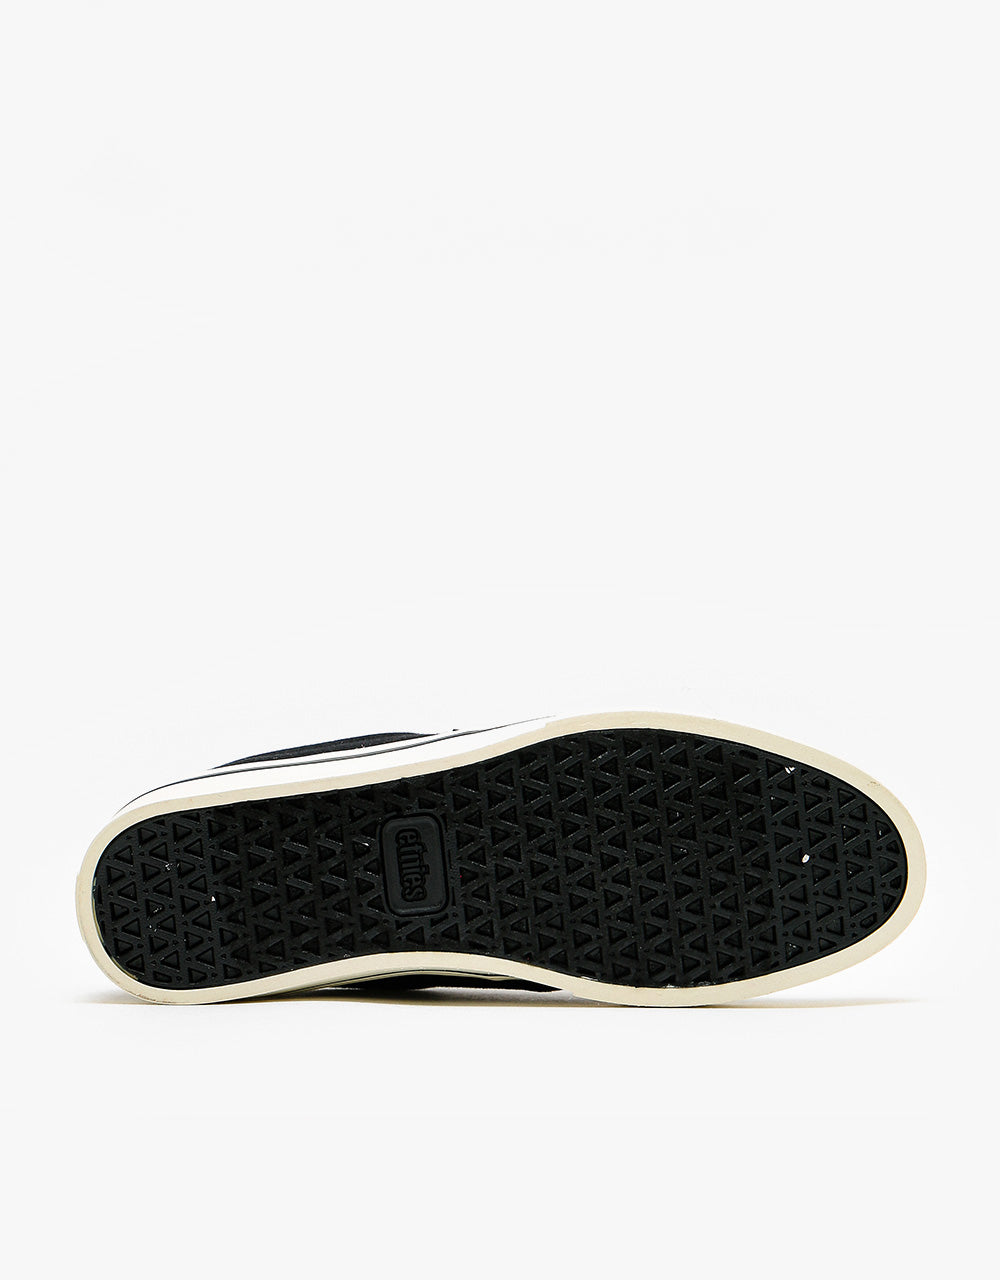 Etnies Jameson 2 Eco Skate Shoes - Black/Black/White